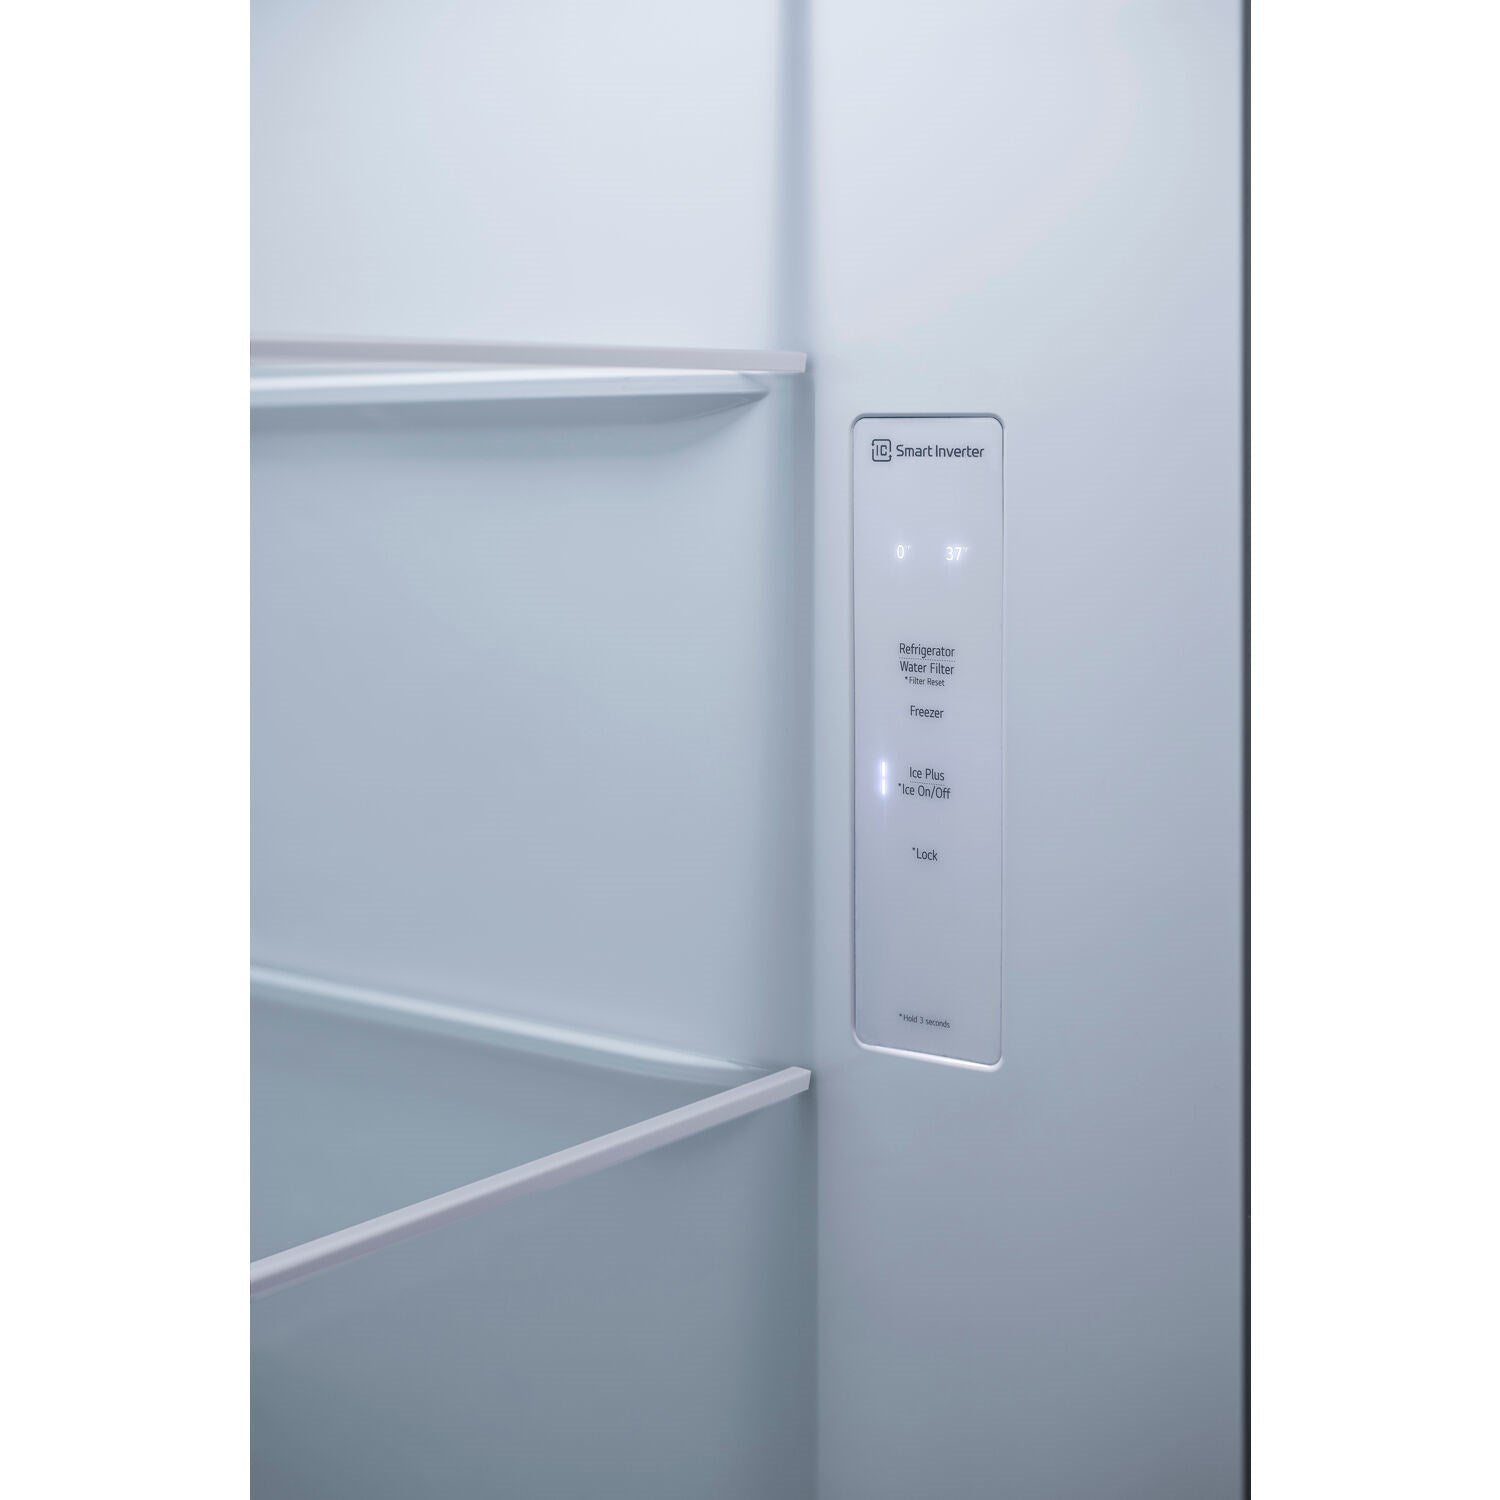 LG - 27 CF Side-by-Side, Ice & Water Dispenser